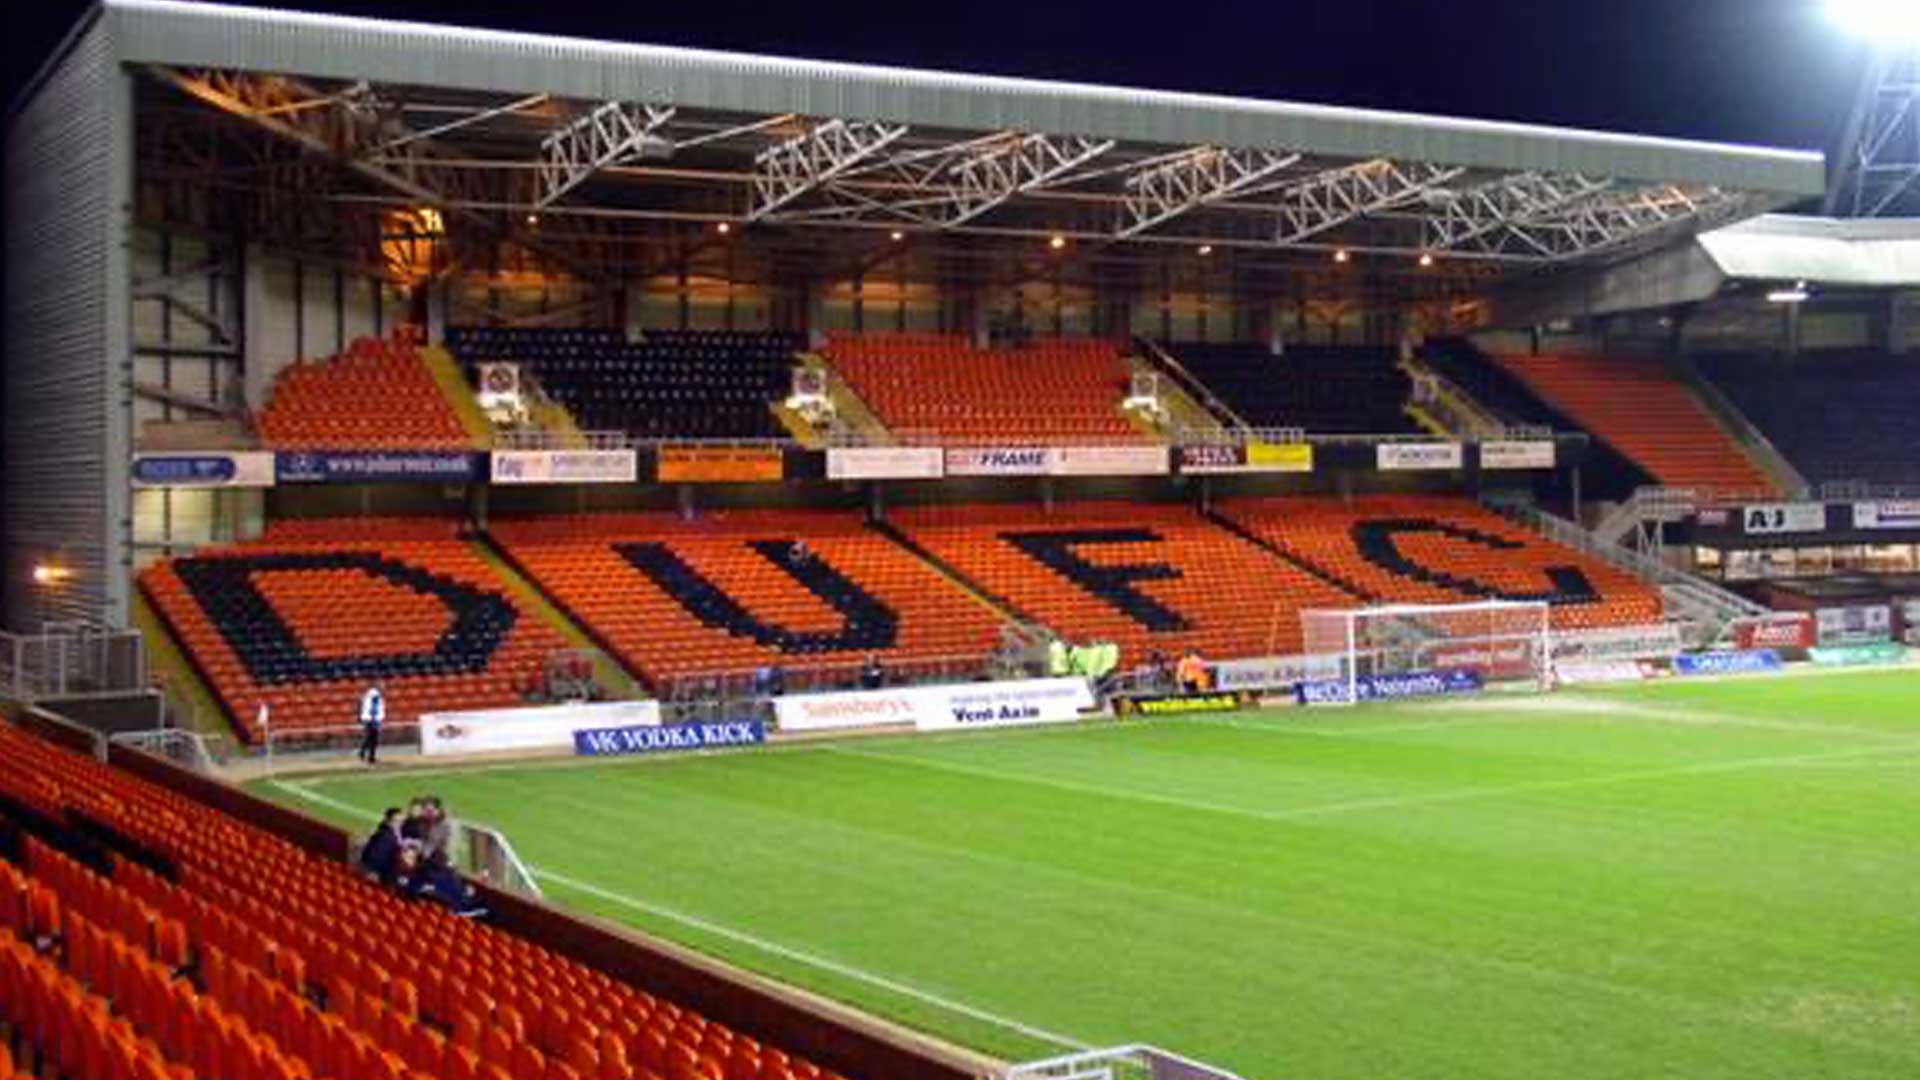 Dundee United's ground